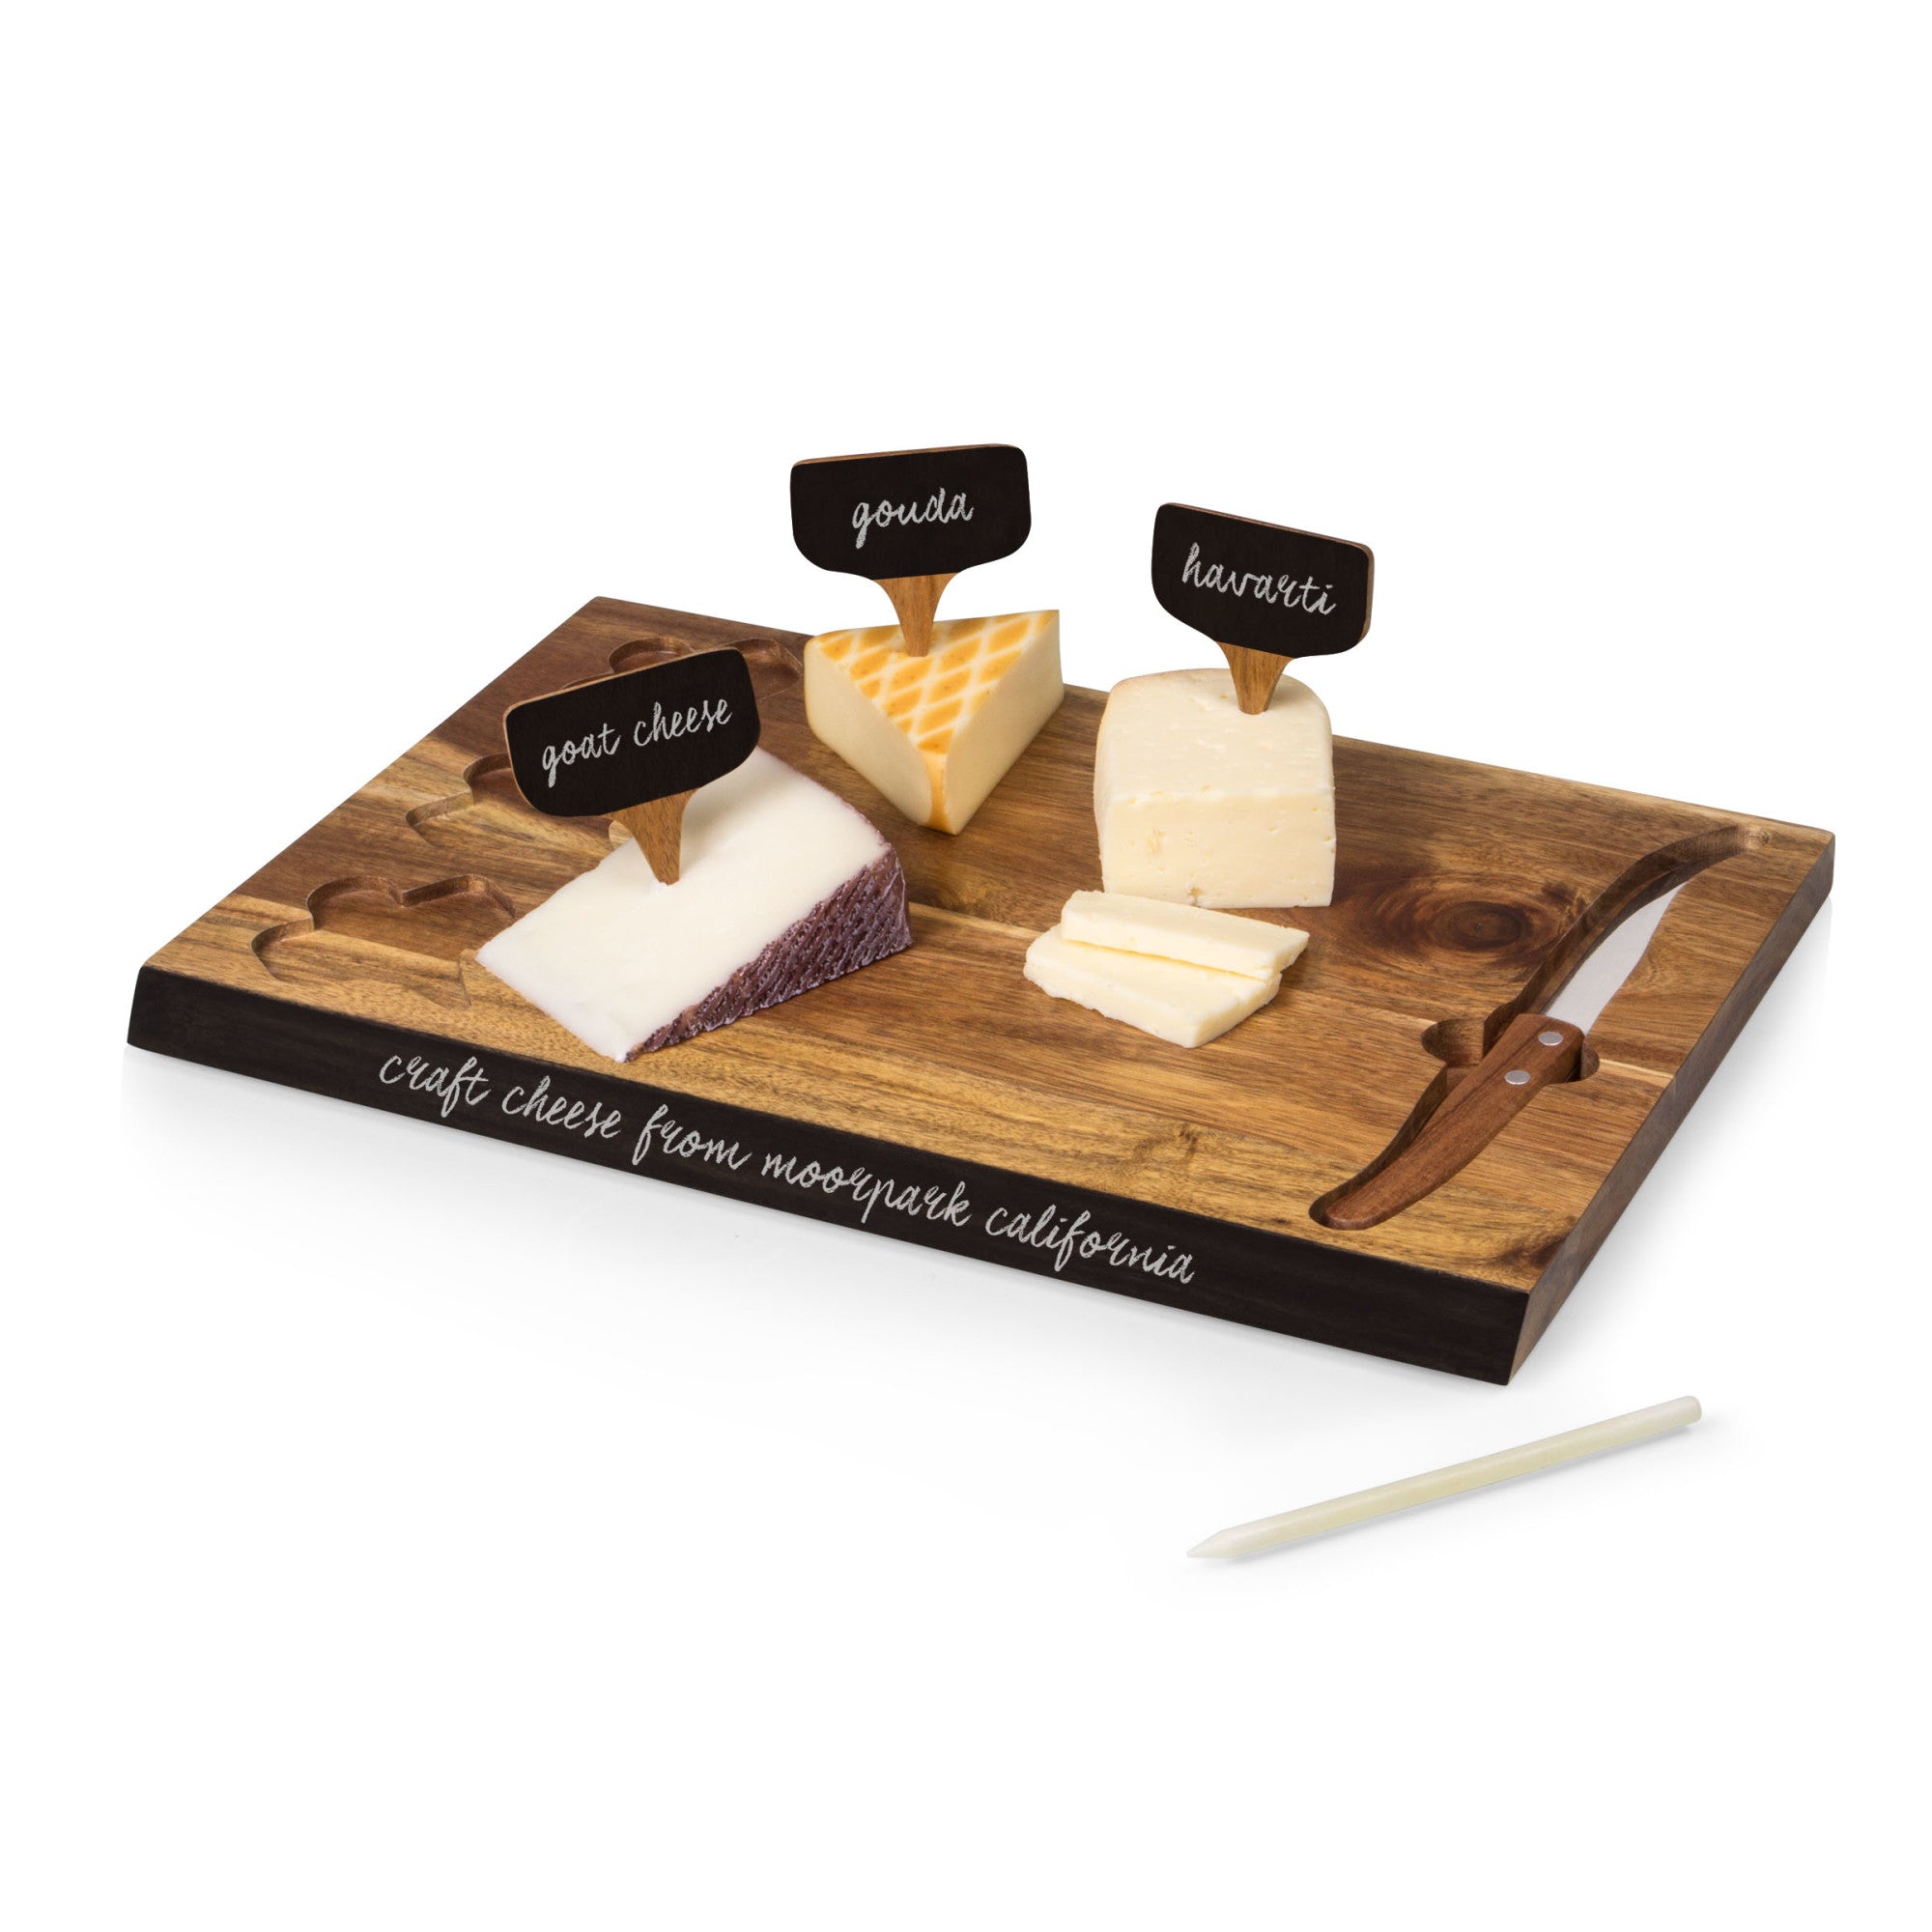 LSU Tigers - Delio Acacia Cheese Cutting Board & Tools Set